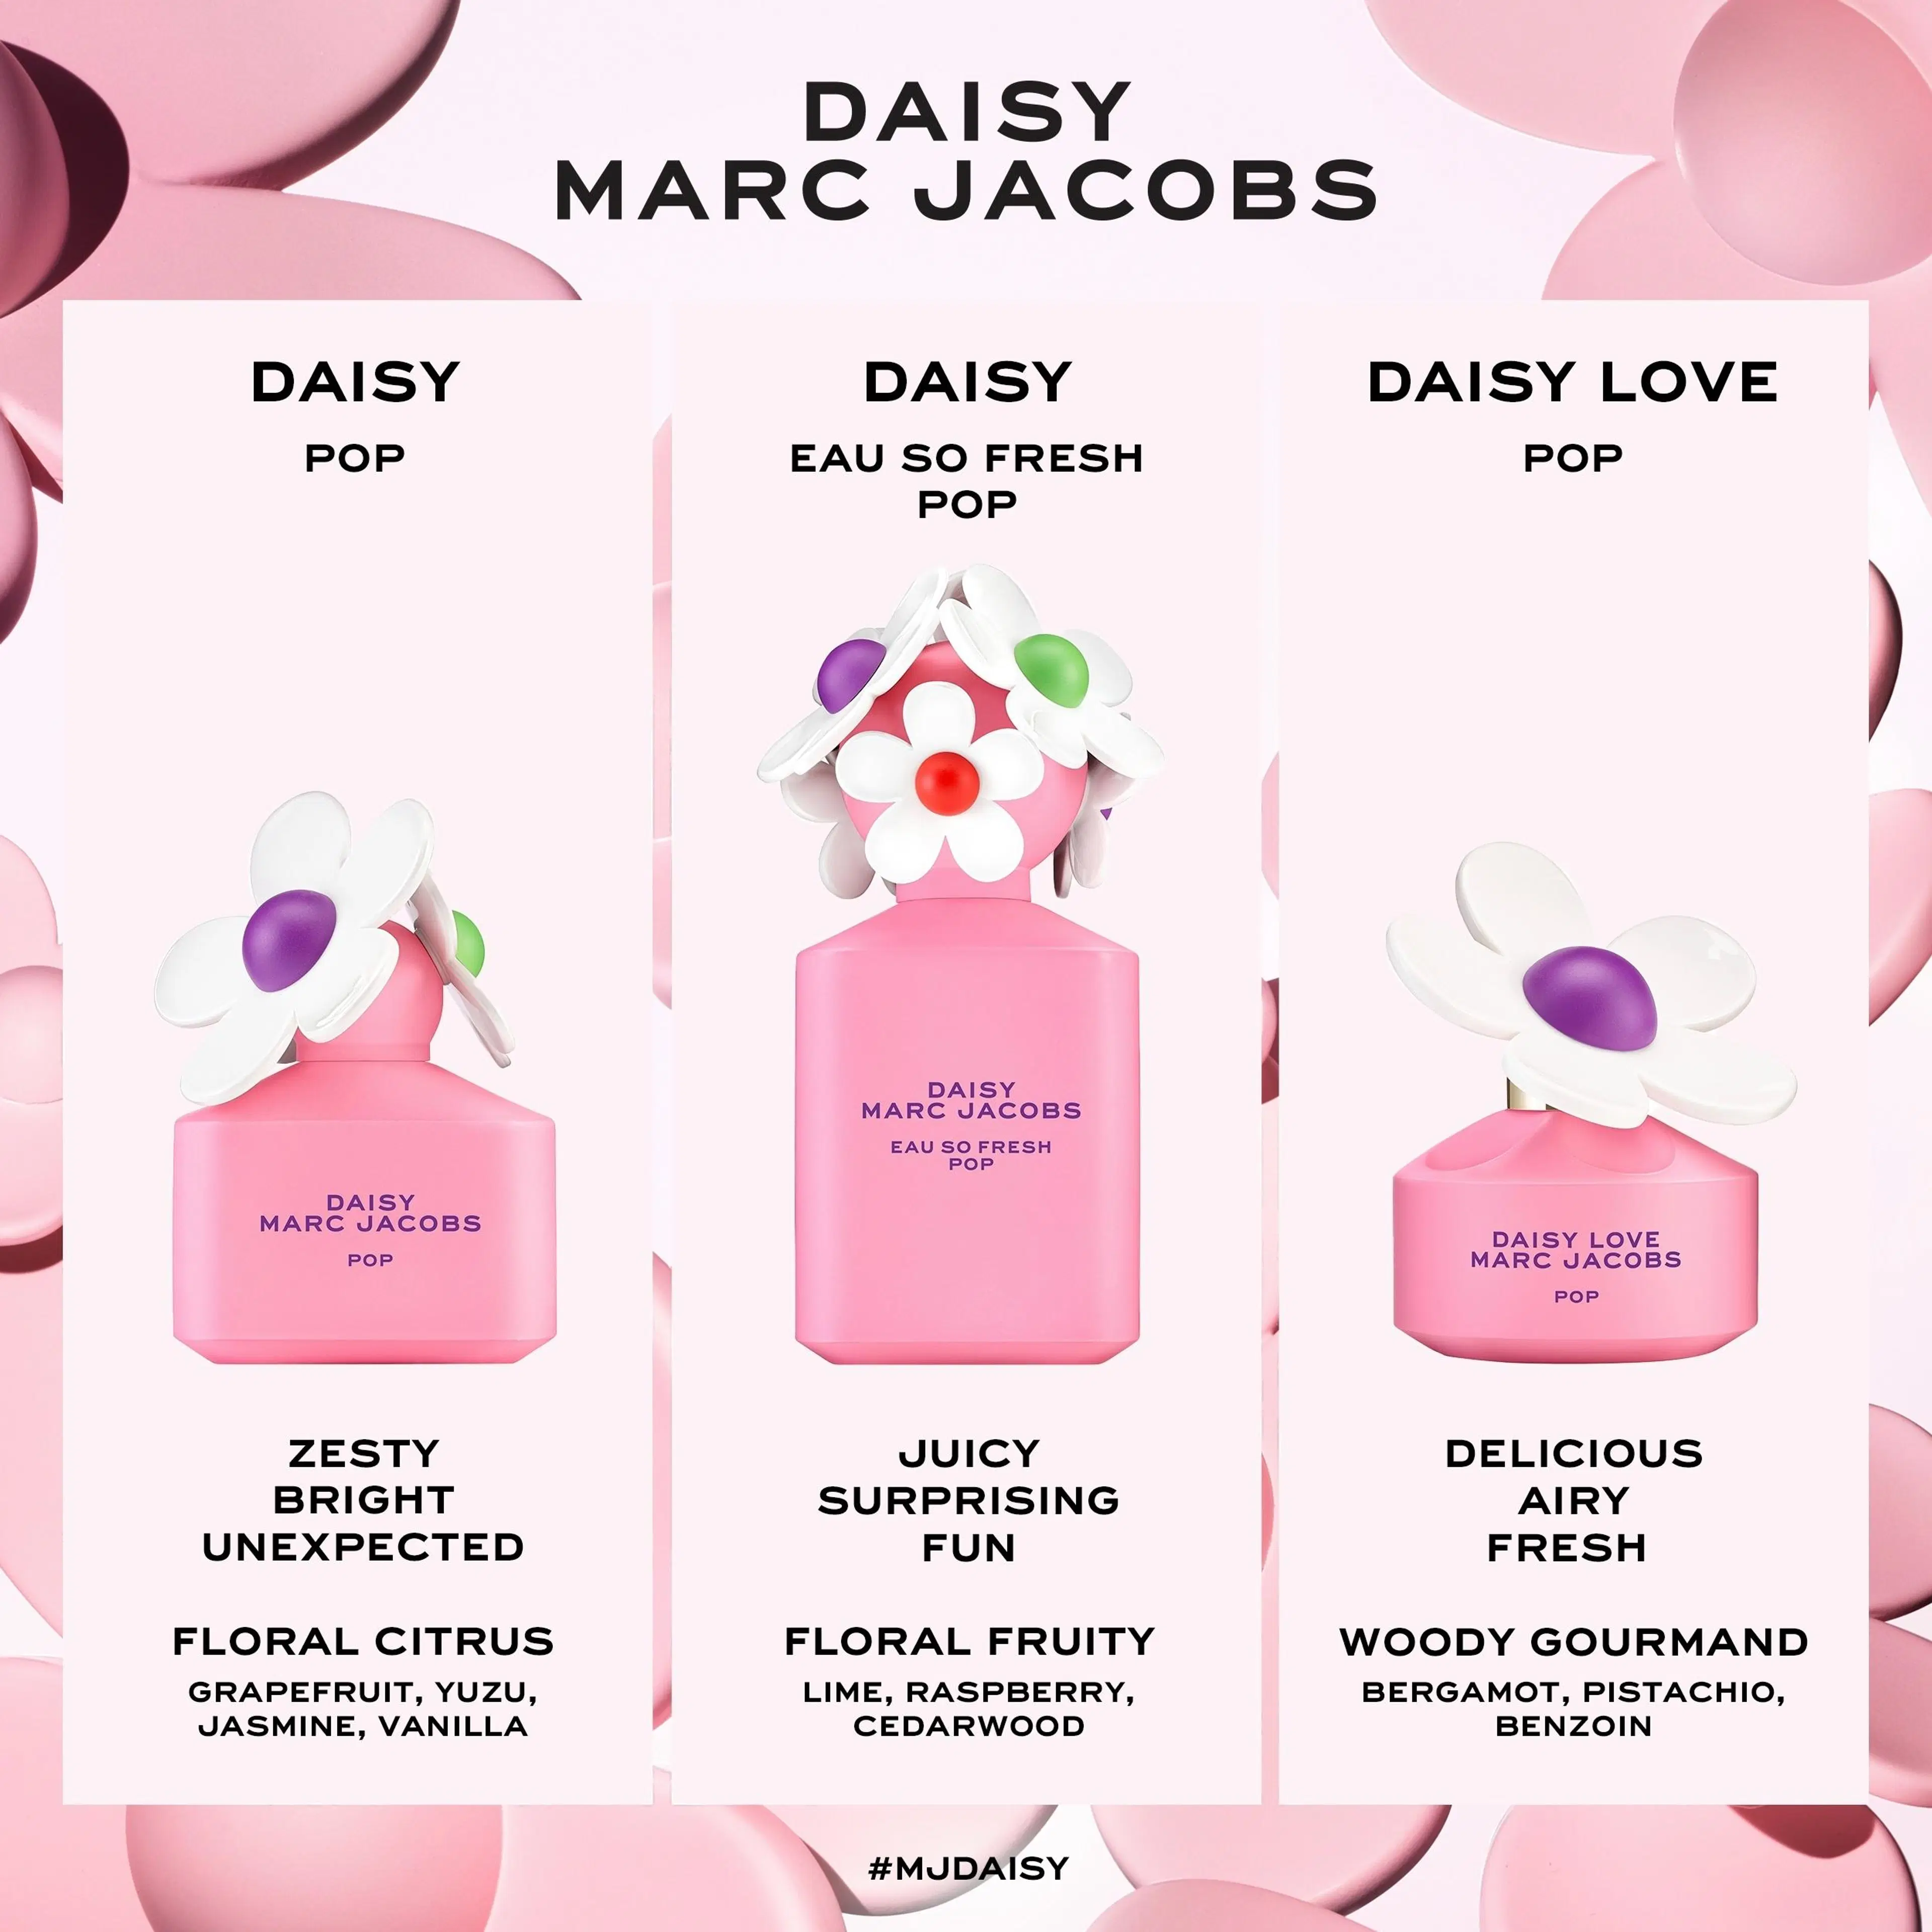 Marc Jacobs Daisy Love Pop EdT tuoksu 50 ml